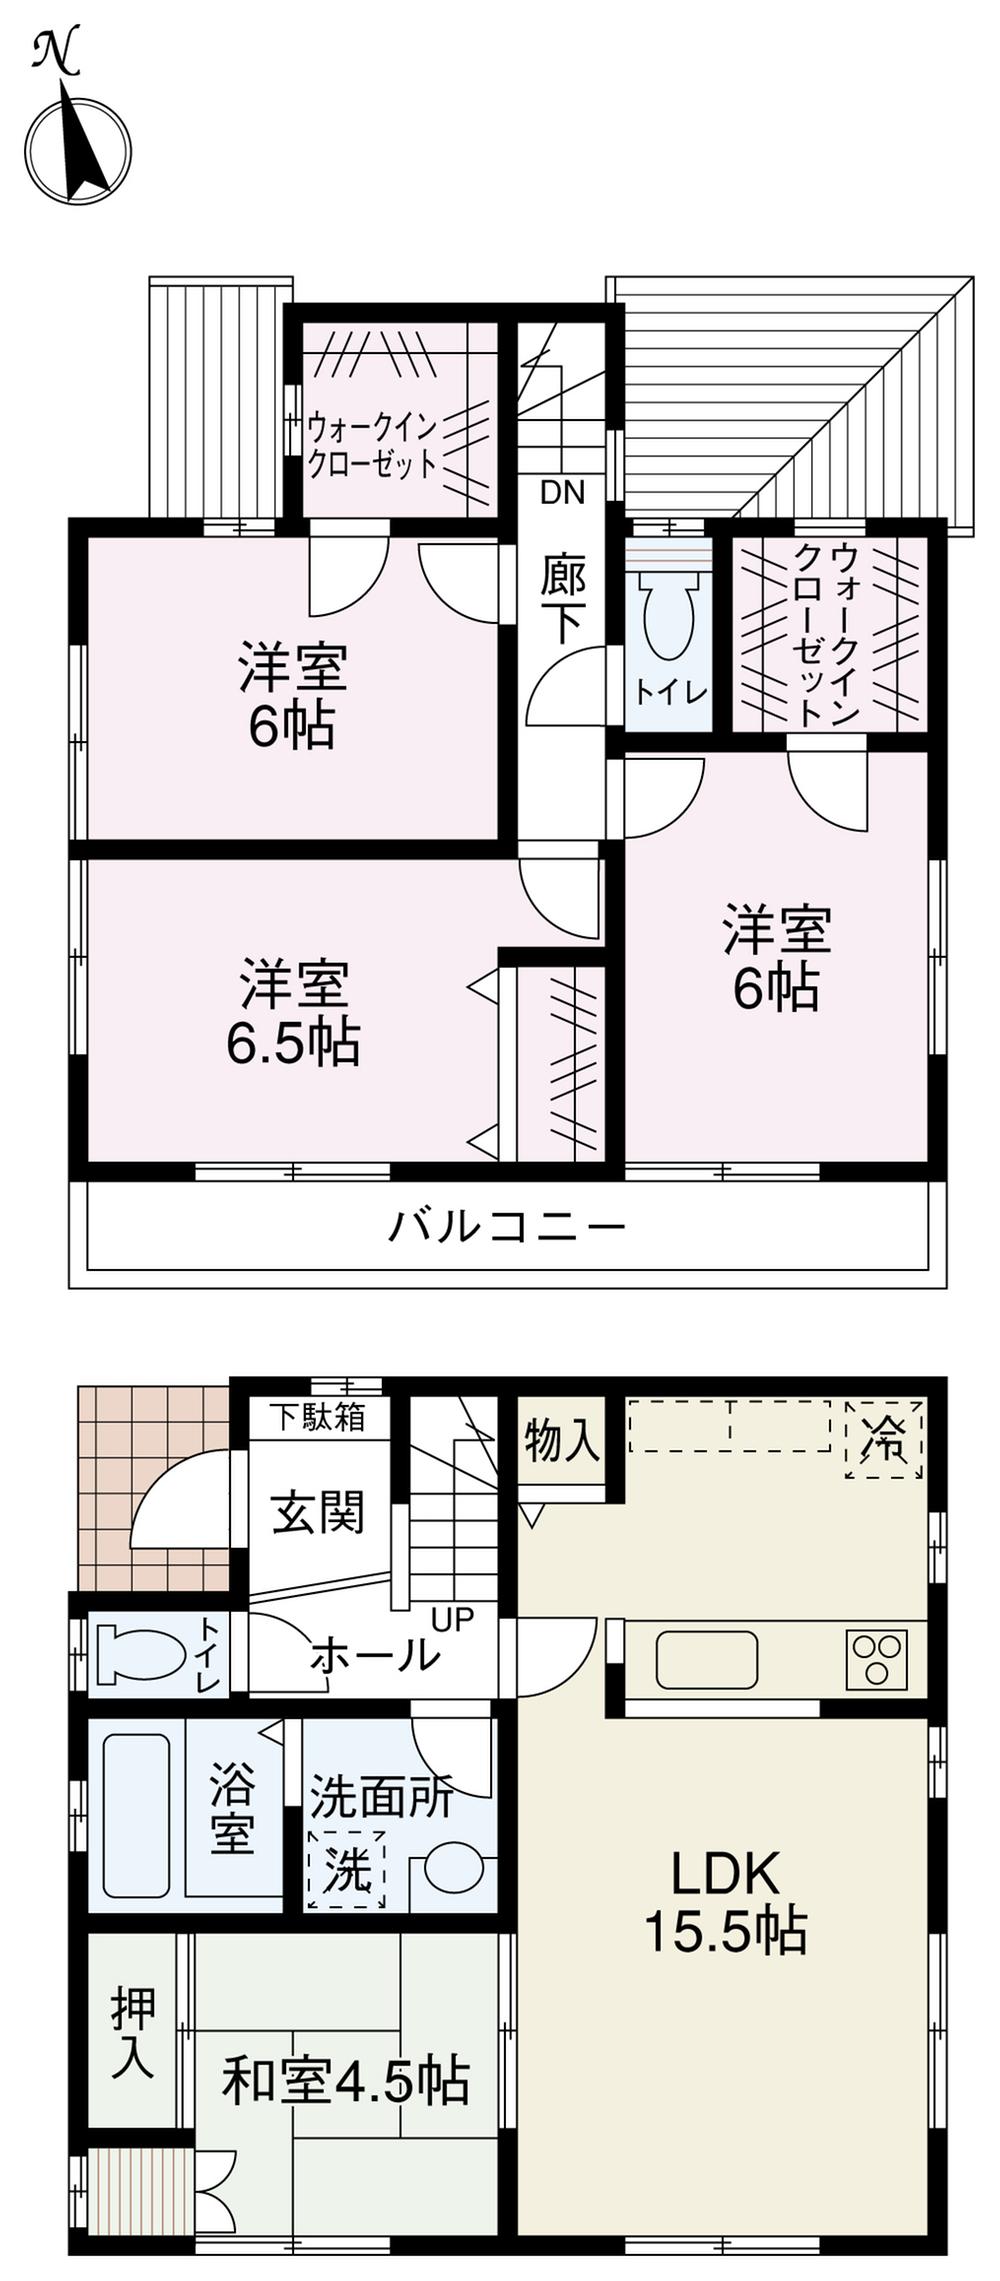 Floor plan. 41,800,000 yen, 4LDK, Land area 115.97 sq m , Building area 95.22 sq m